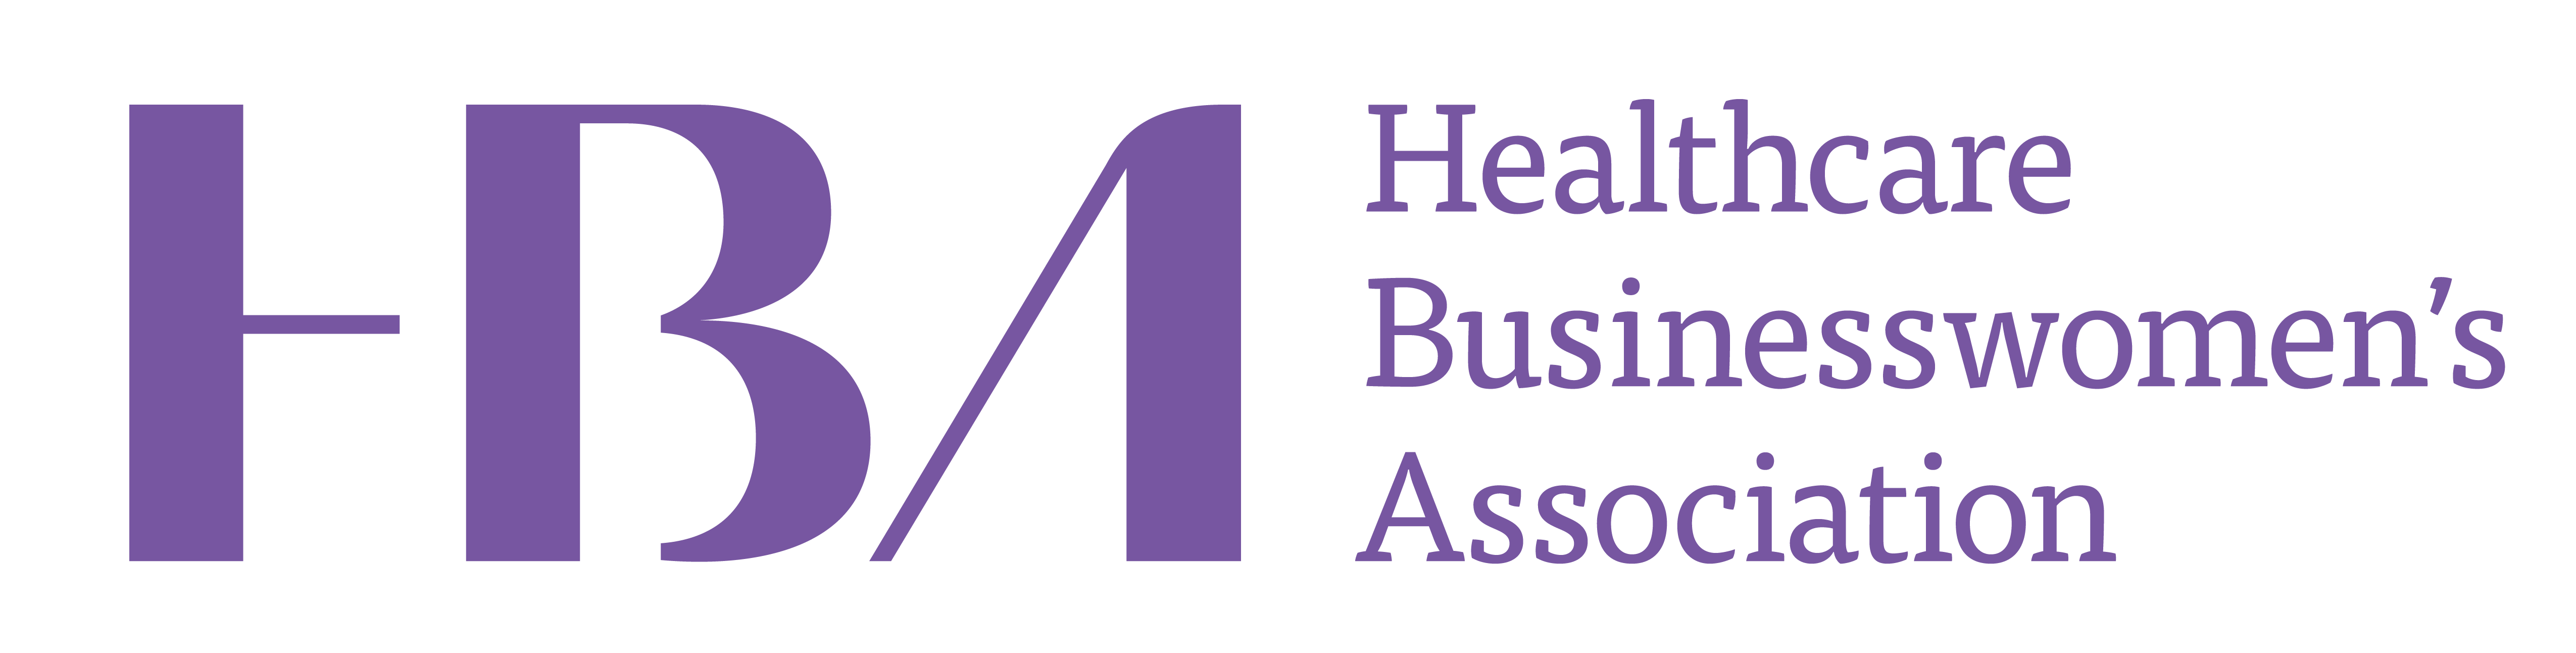 HBA Logo Purple